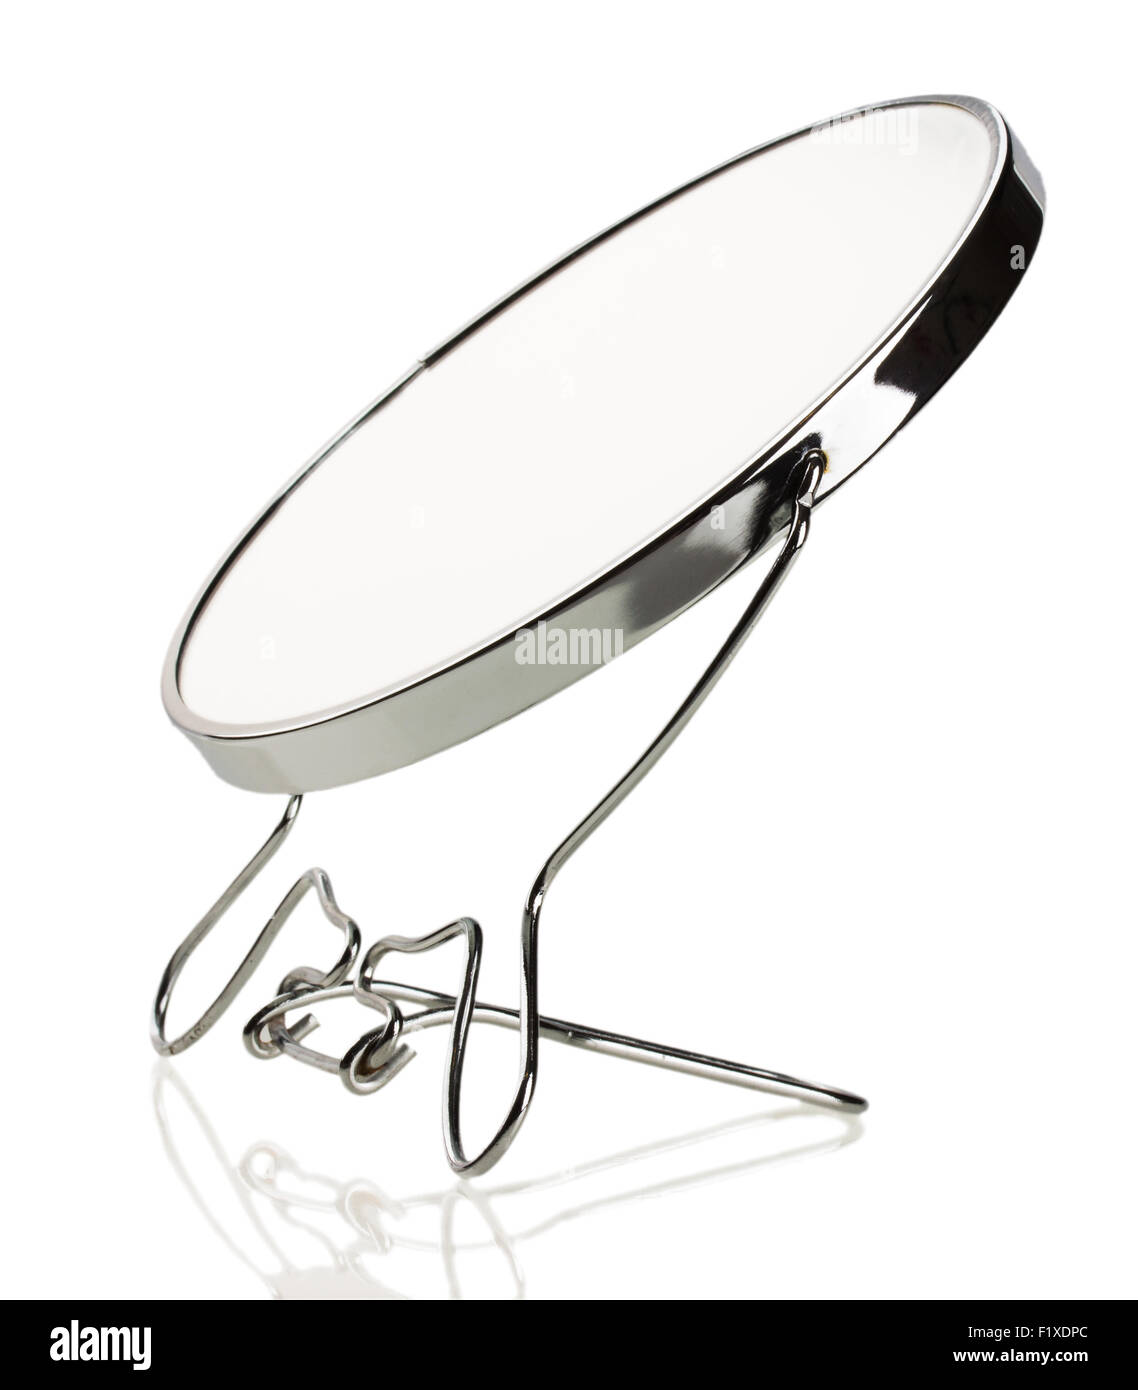 vanity mirror on a white background. Stock Photo